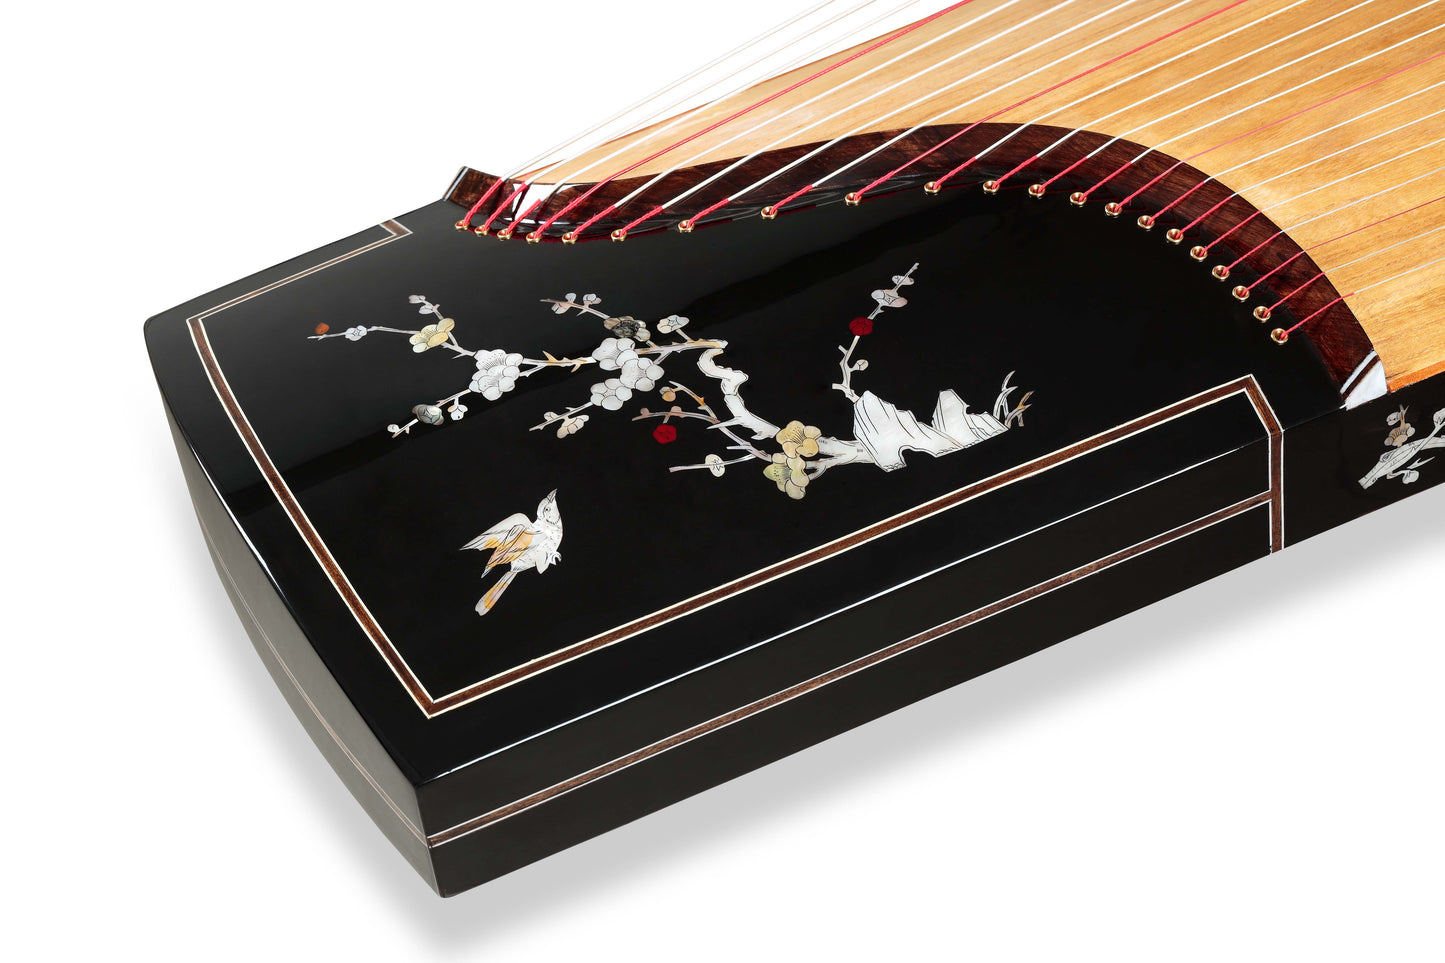 Zhuque Guzheng 690B, Scarlet Bird, buy guzheng,163cm guzheng, full-size guzheng, quality guzheng, premium guzheng, 朱雀古筝690B，朱雀海外代理，标准古筝，买古筝，海外买古筝，高性价比古筝｜ Guzheng World 古筝世界